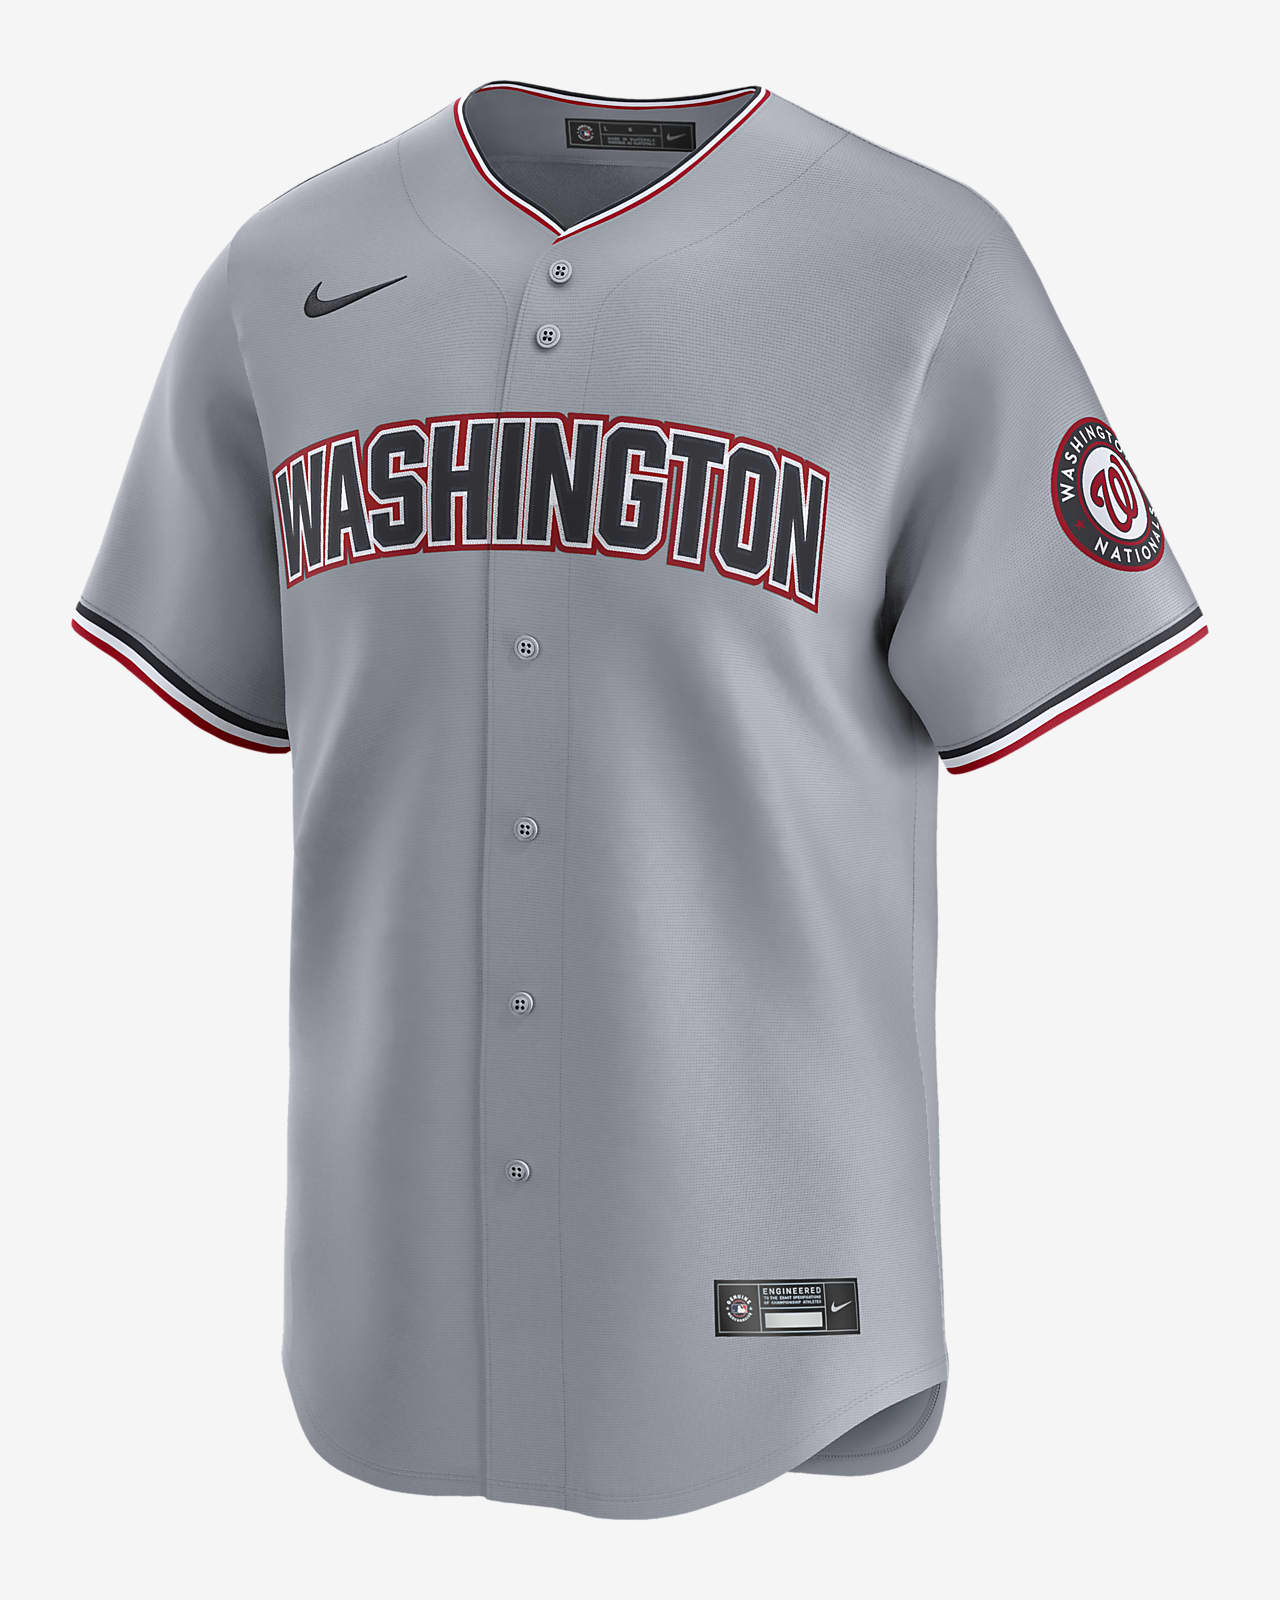 Washington Nationals Men's Nike Dri-FIT ADV MLB Limited Jersey